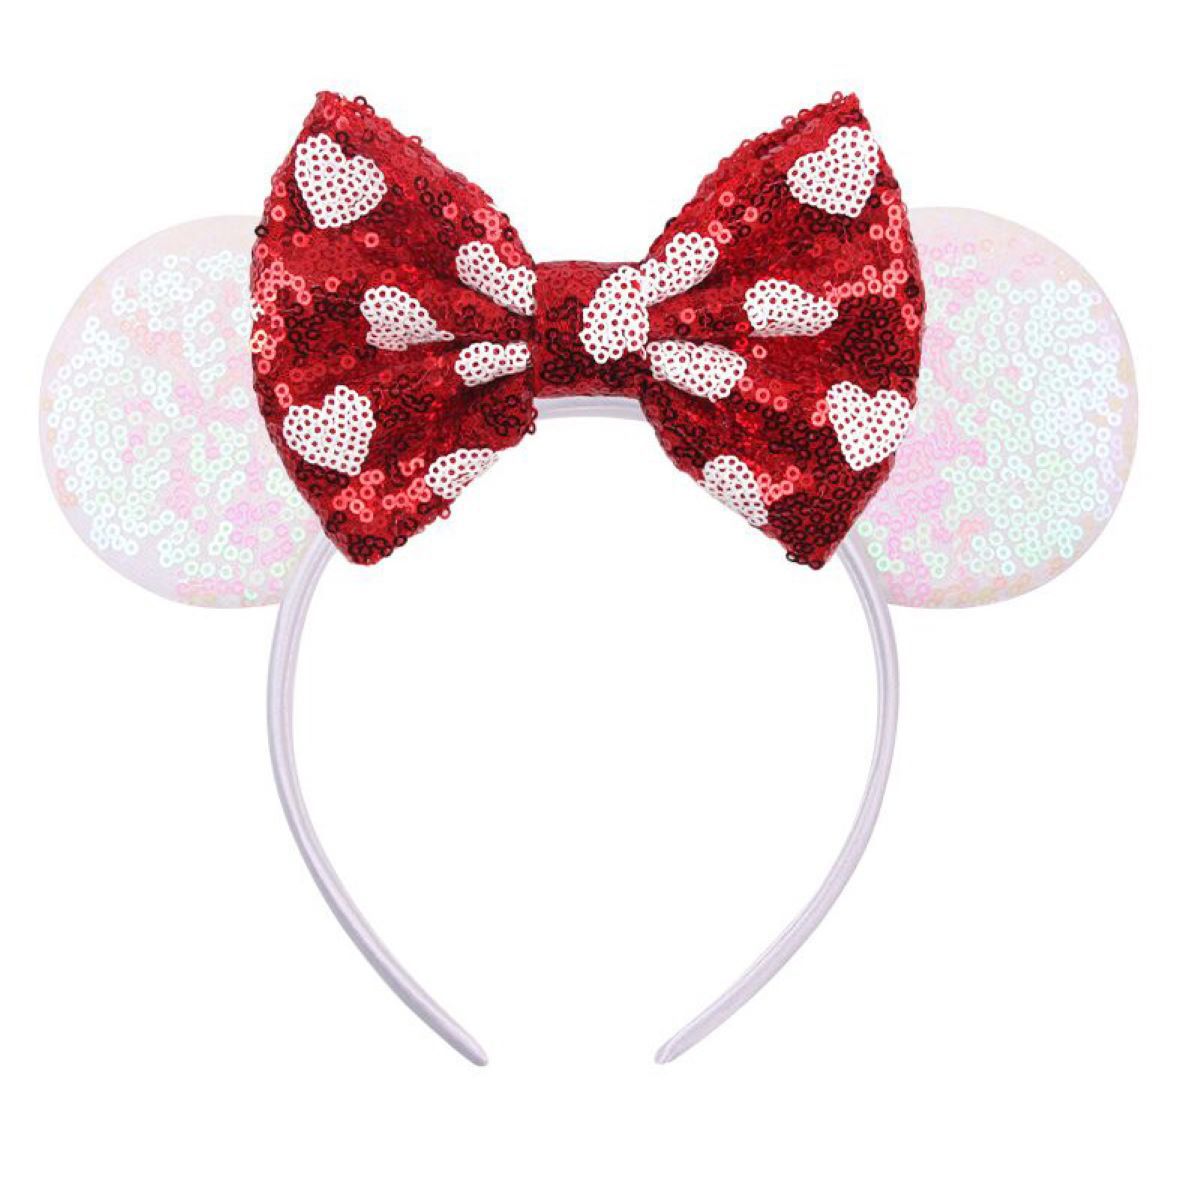 Mickey Headband Mickey Ear Sequin Hair Accessories Polka Dot Sequin Bow Polka Dot Mickey Ear Headband